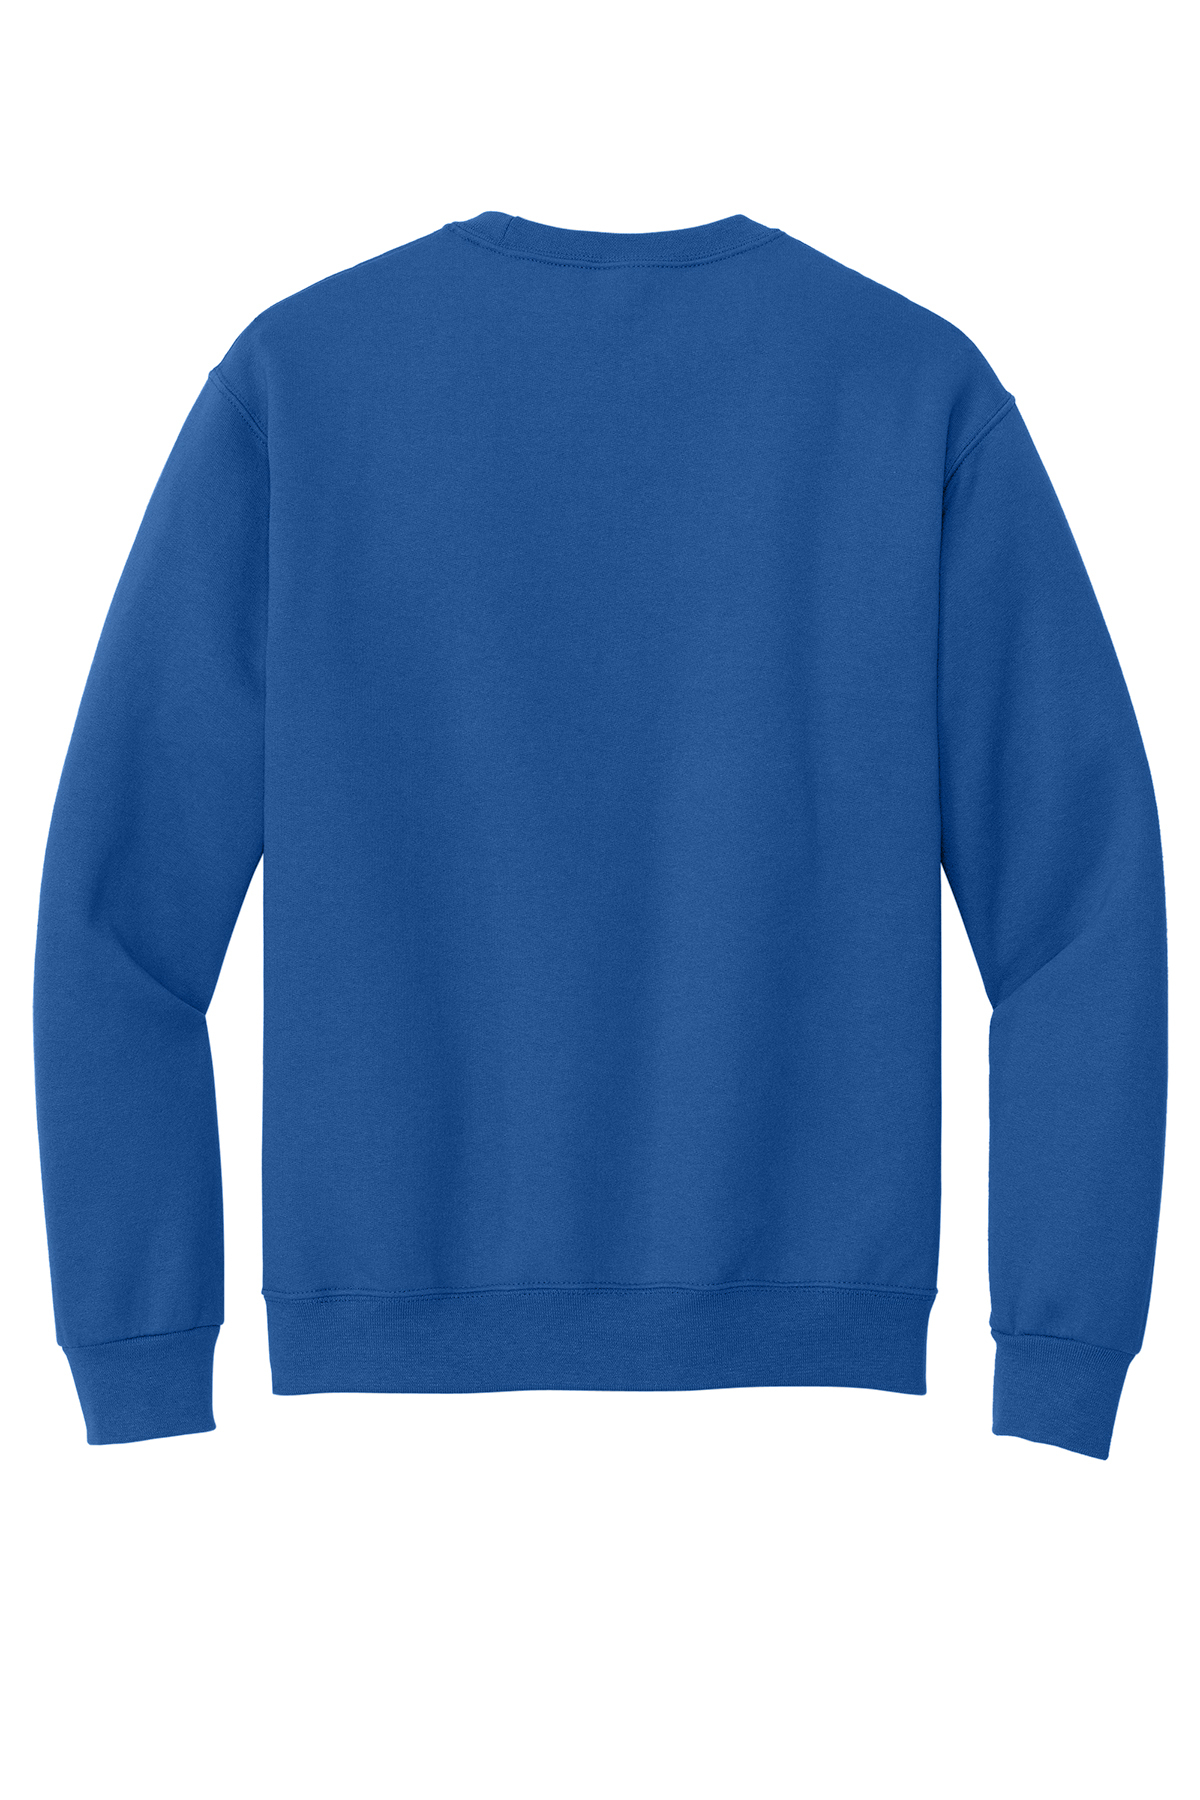 Jerzees Super Sweats NuBlend - Crewneck Sweatshirt | Product | SanMar